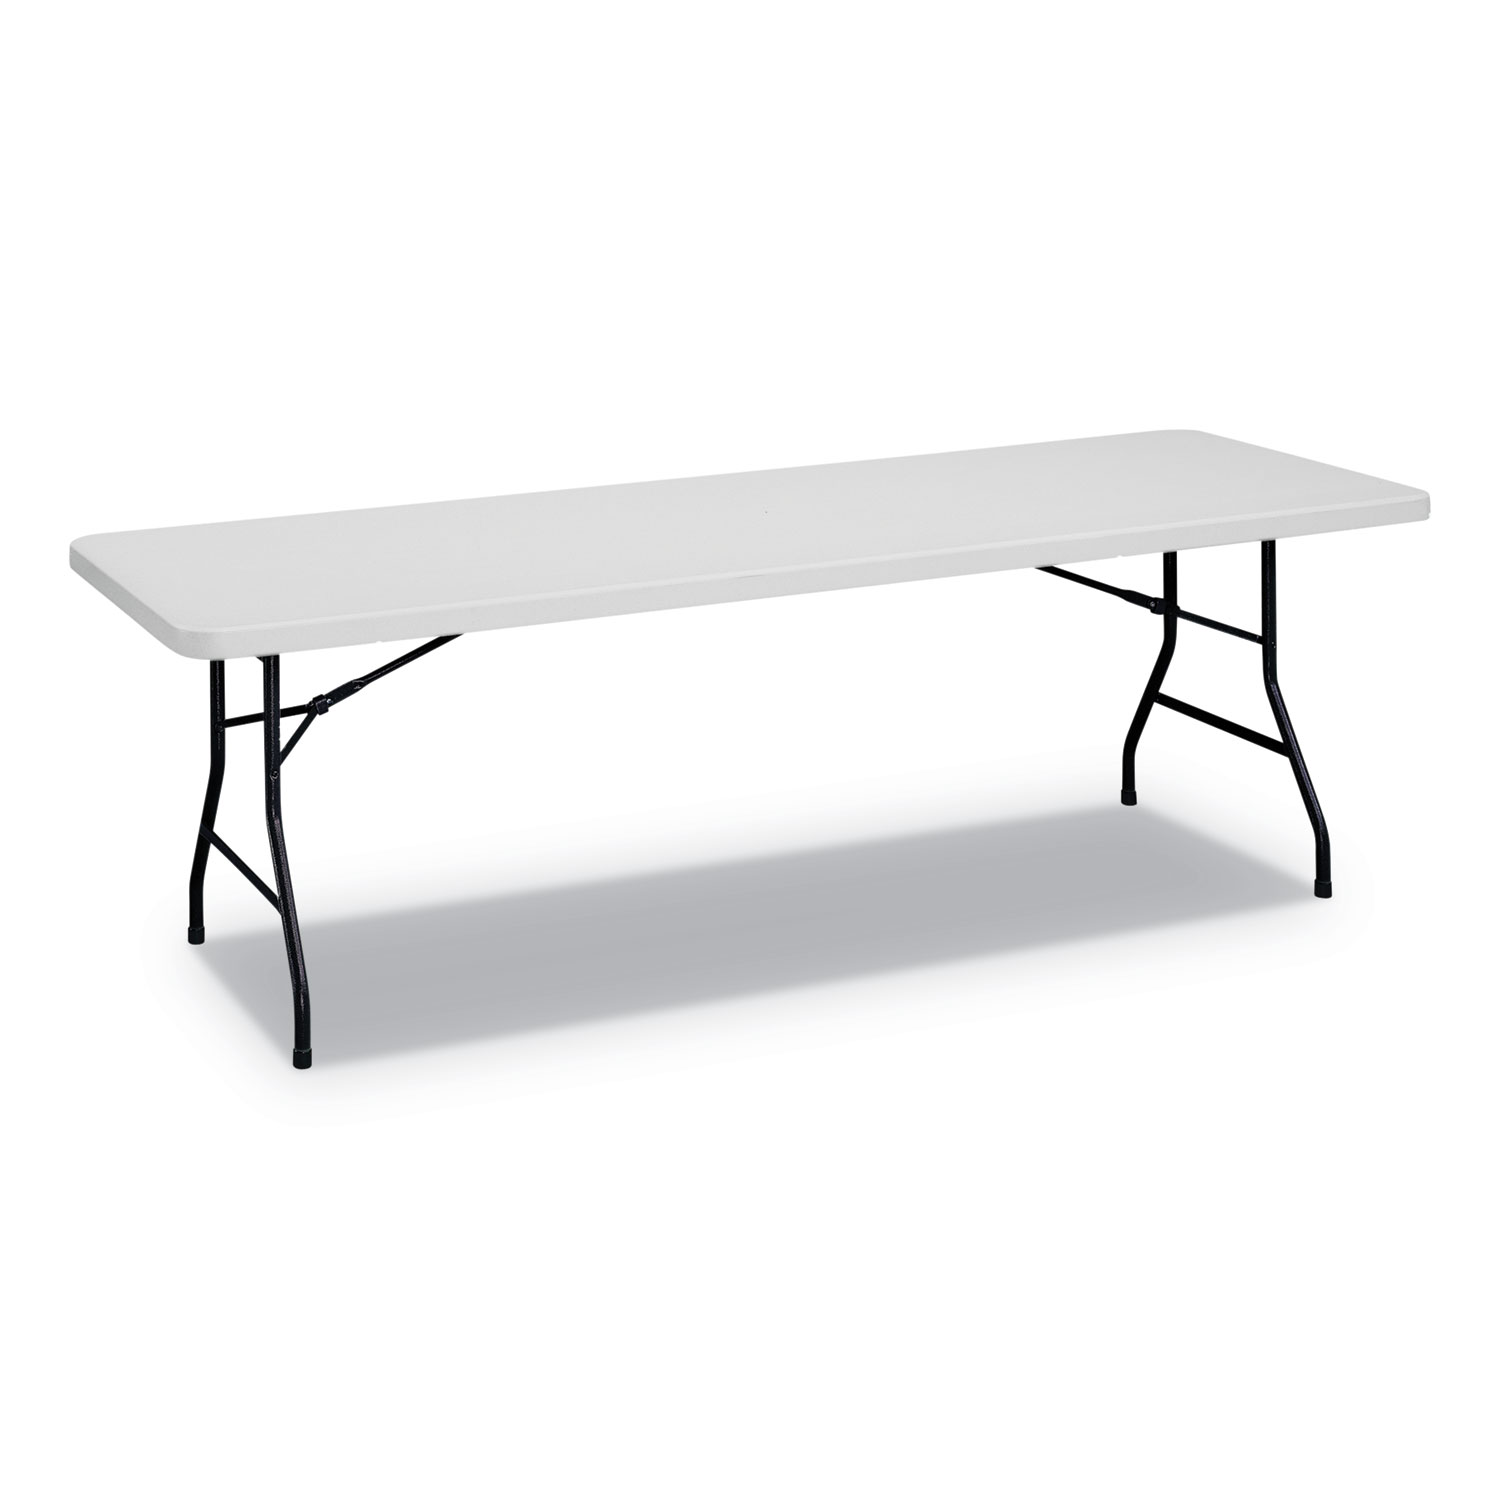  Alera ALEPT9630G Rectangular Plastic Folding Table, 96w x 30d x 29 1/4h, Gray (ALEPT9630G) 